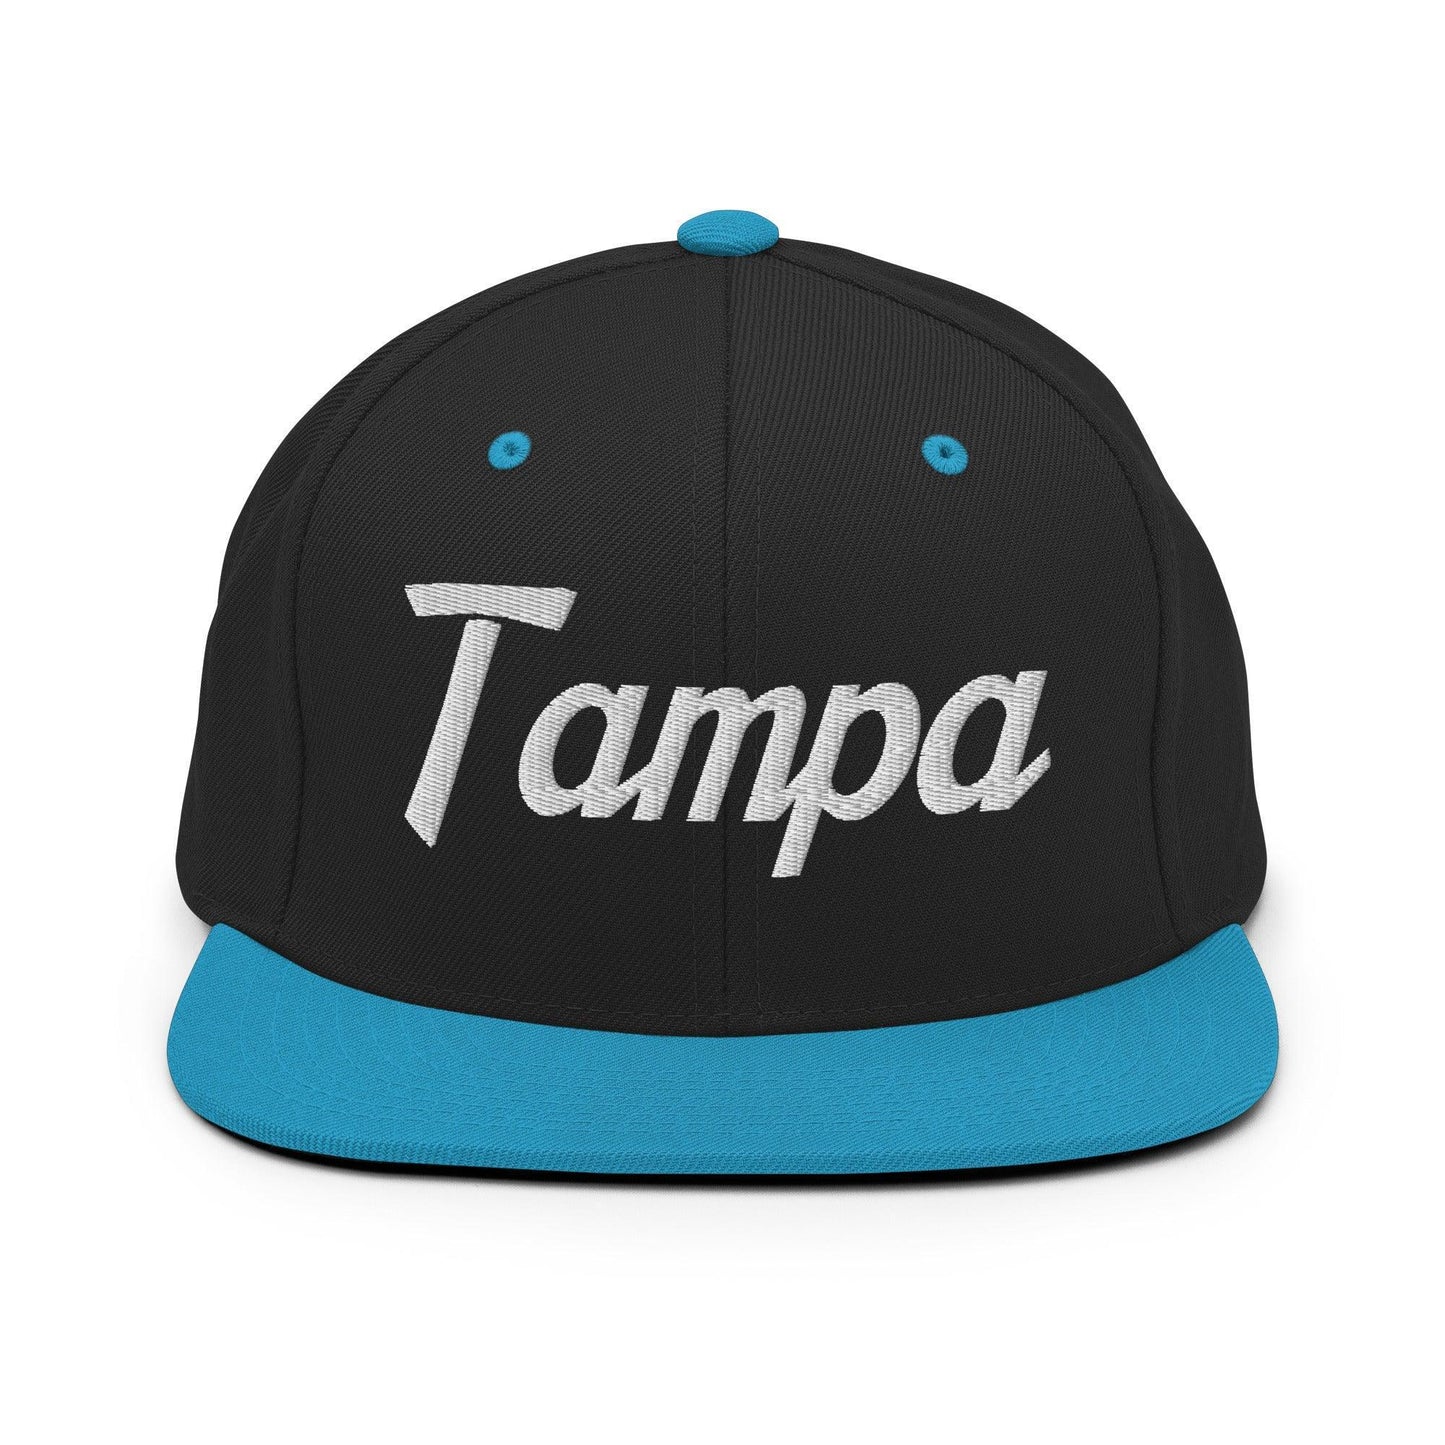 Tampa Script Snapback Hat Black Teal